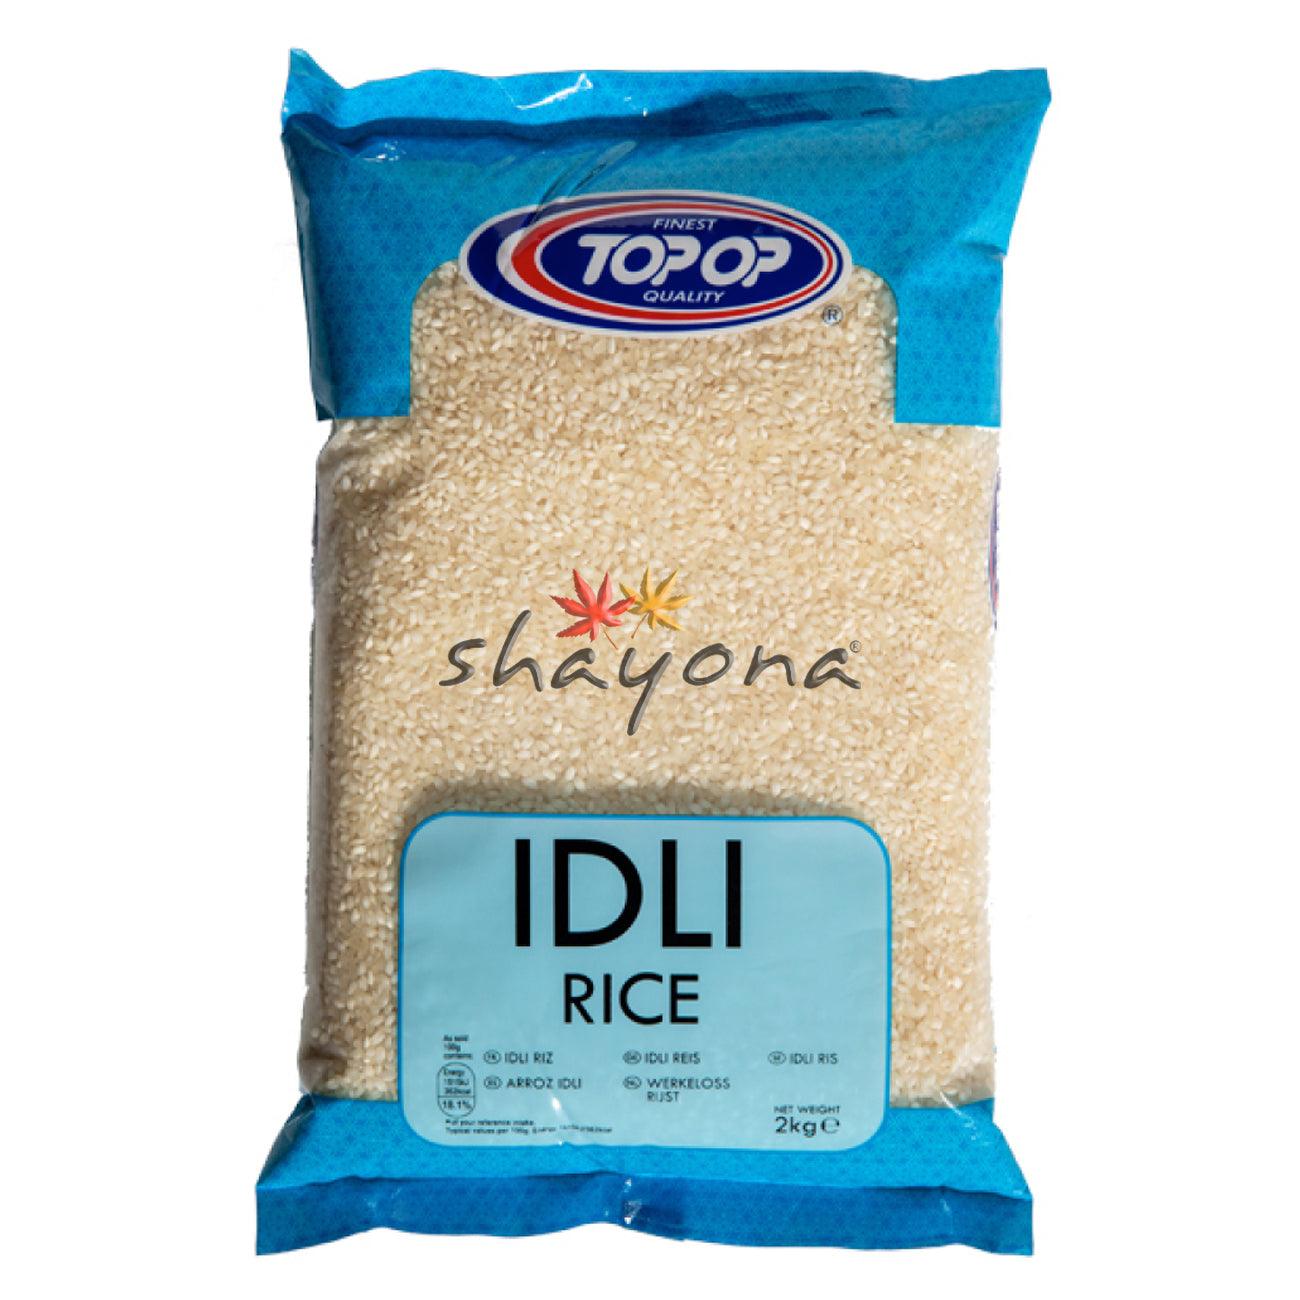 TopOp Idli Rice - Shayona UK